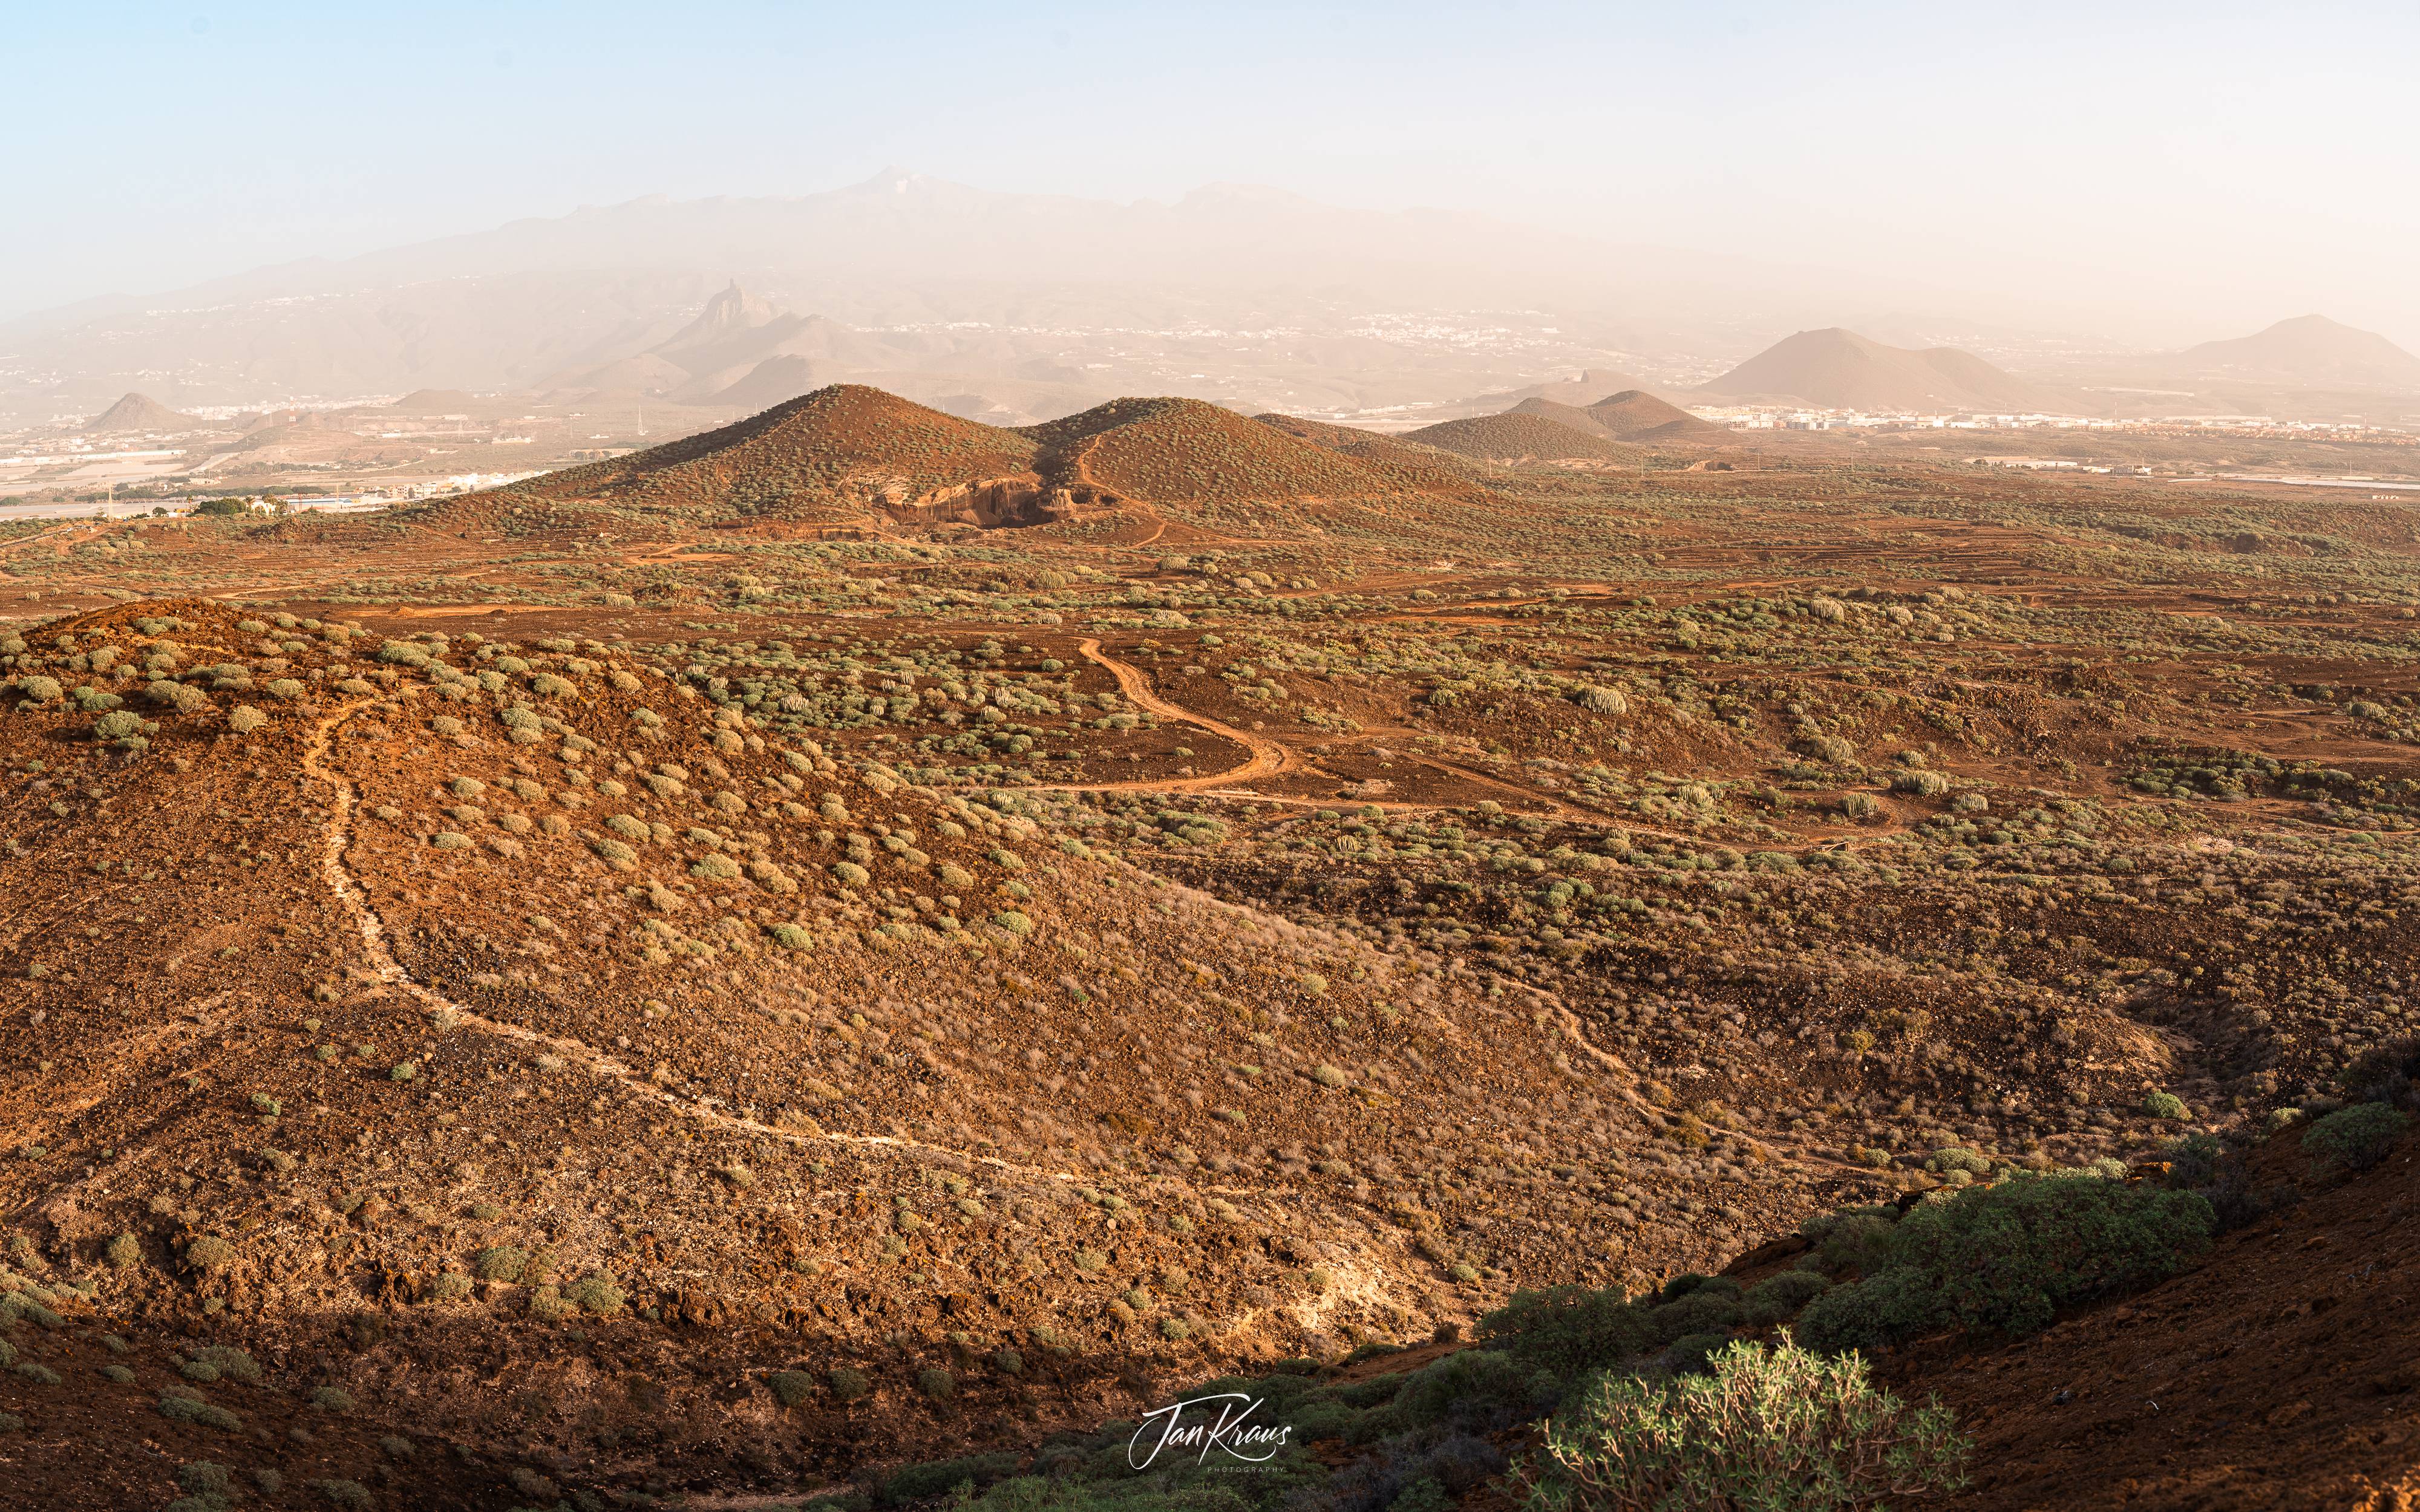 A view towards the island, captured at Montaña Amarilla, Tenerife, Canary Islands, Spain